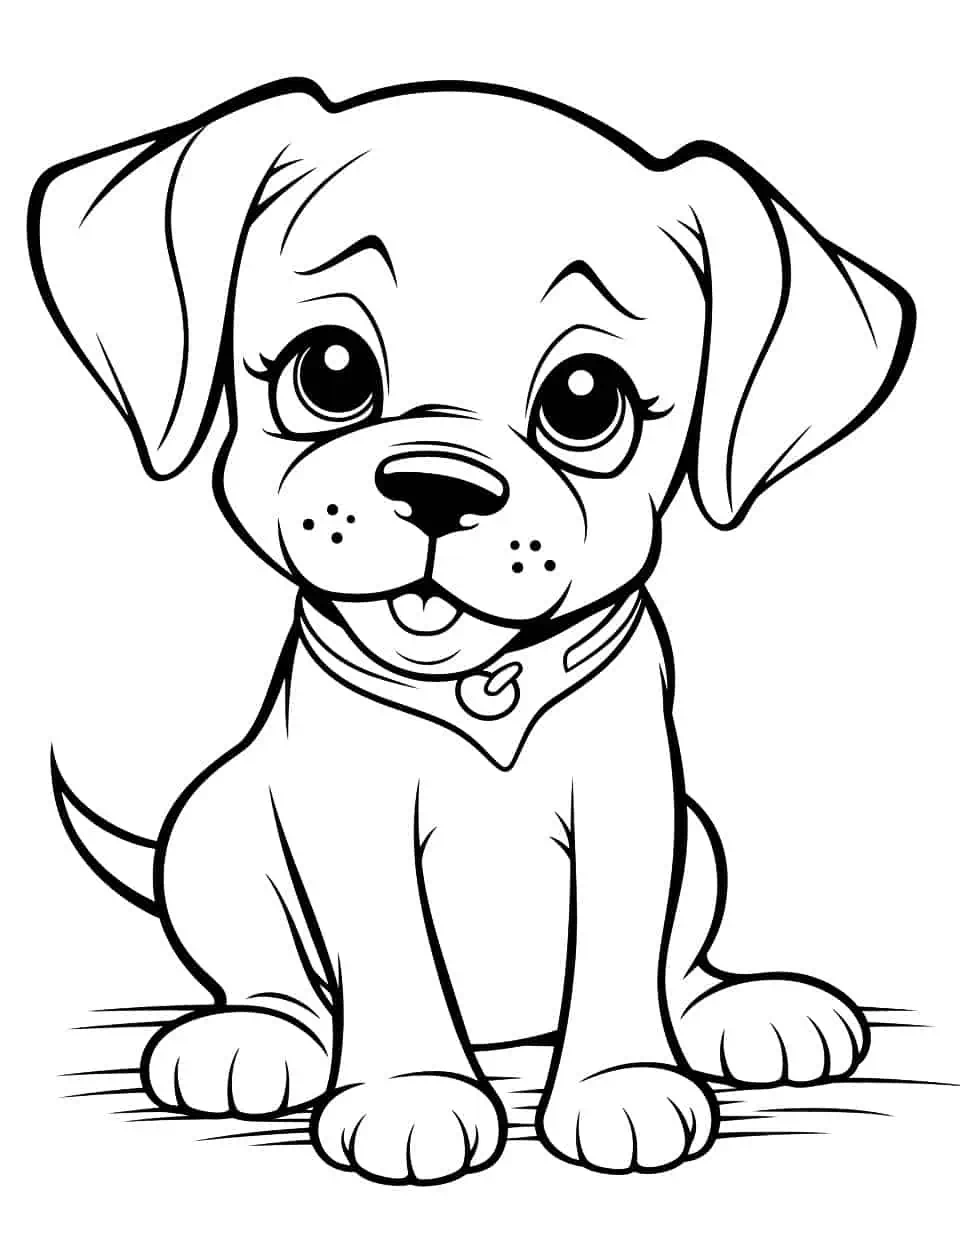 Advanced Beagle Portrait Dog Coloring Page - An advanced coloring page featuring a realistic and detailed Beagle.